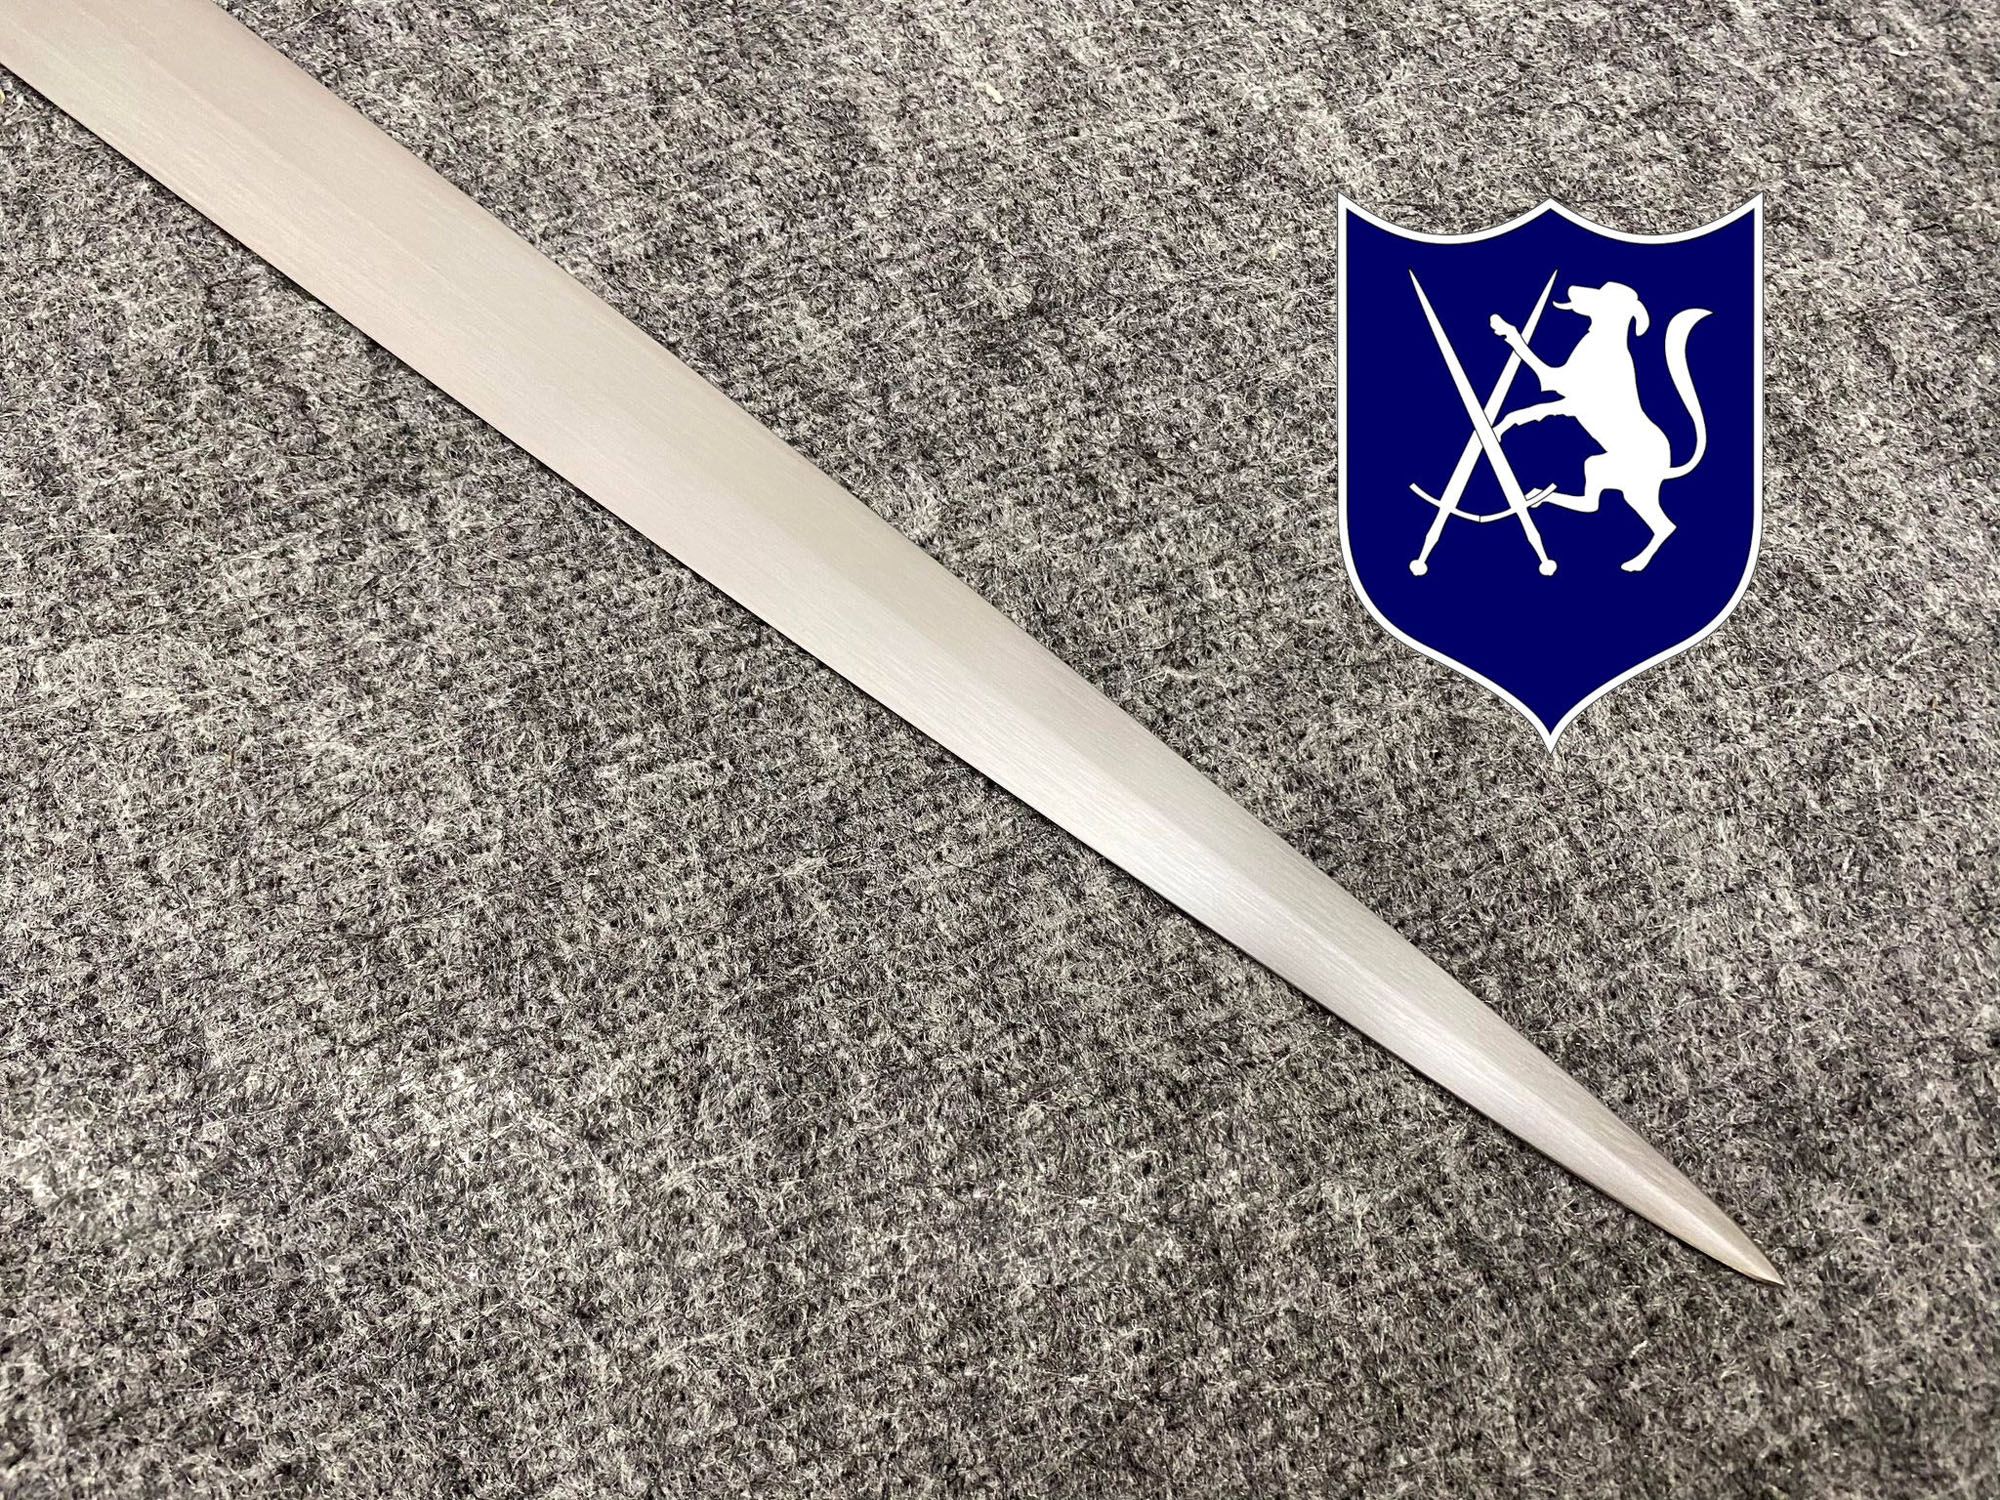 The Strasbourg Sword, handforged and sharp blade